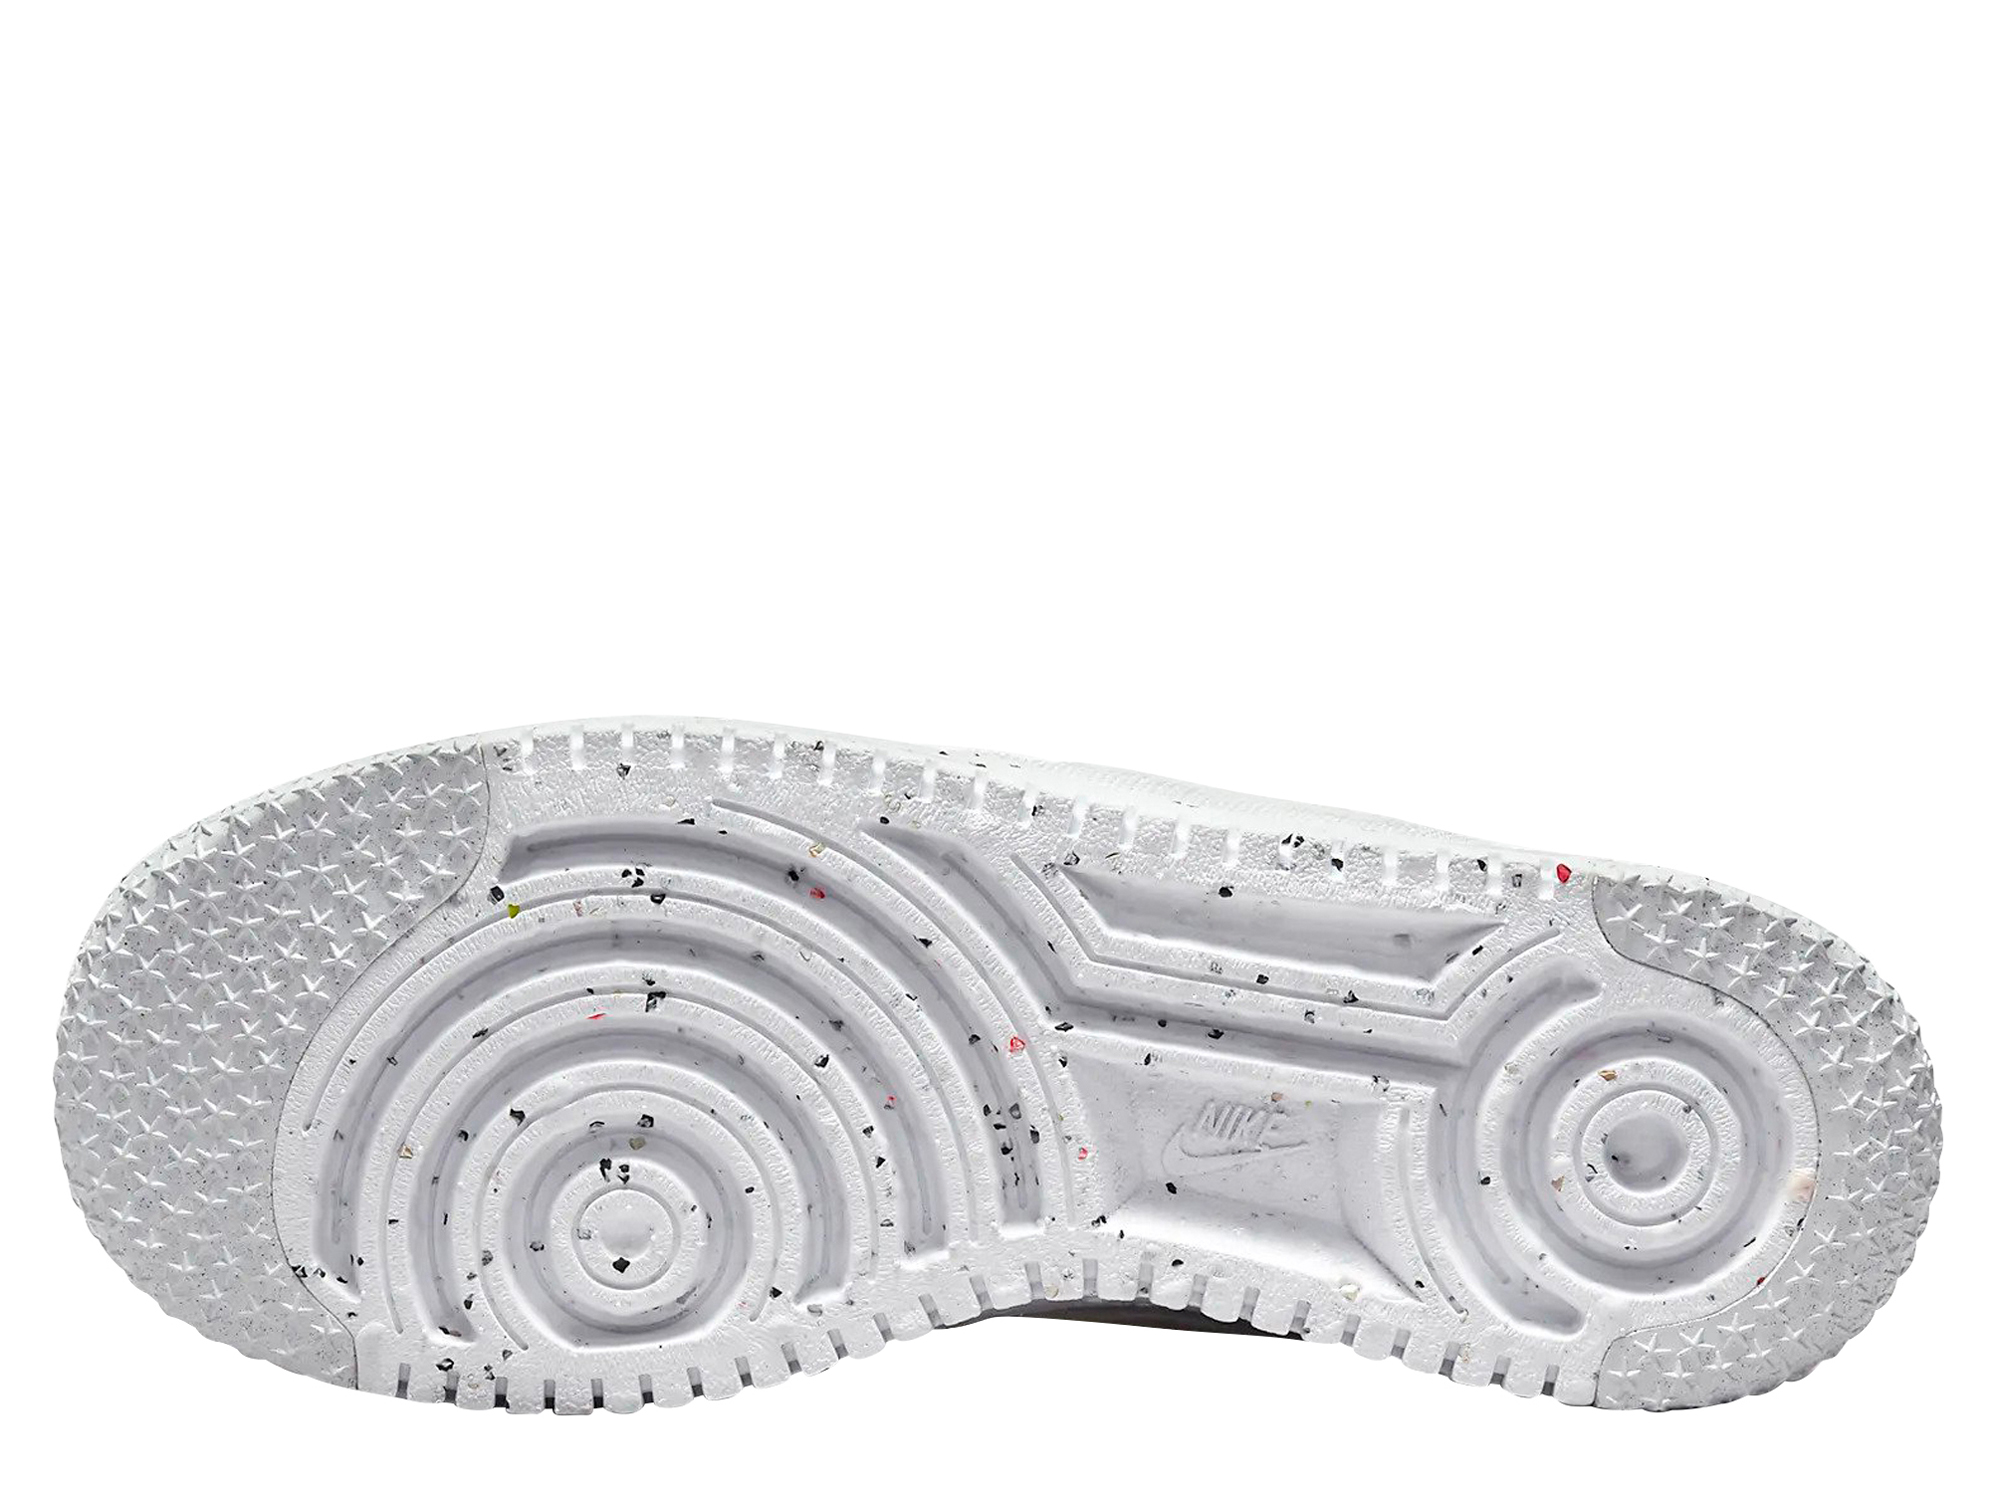 Nike Air Force 1 Crater Flyknit Herren Sneaker